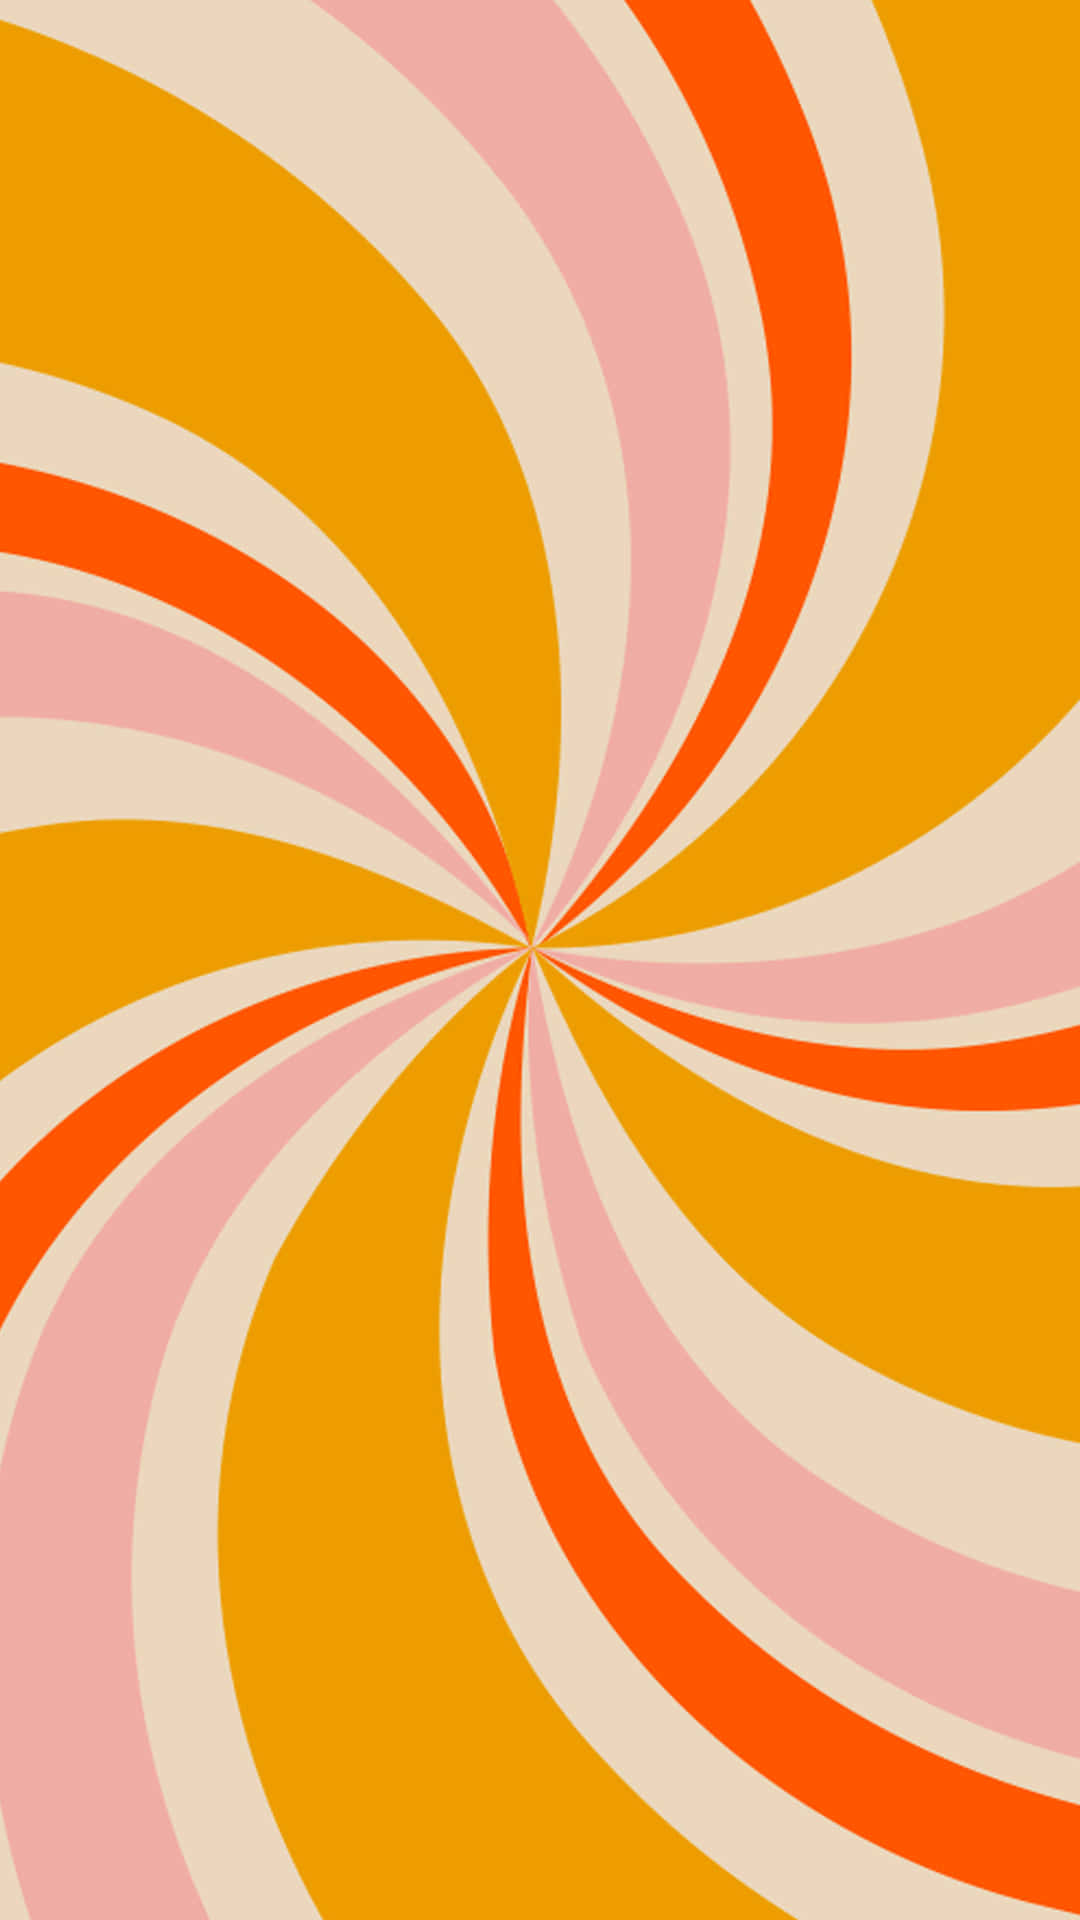 Retro Swirl Orange Pink Aesthetic Wallpaper